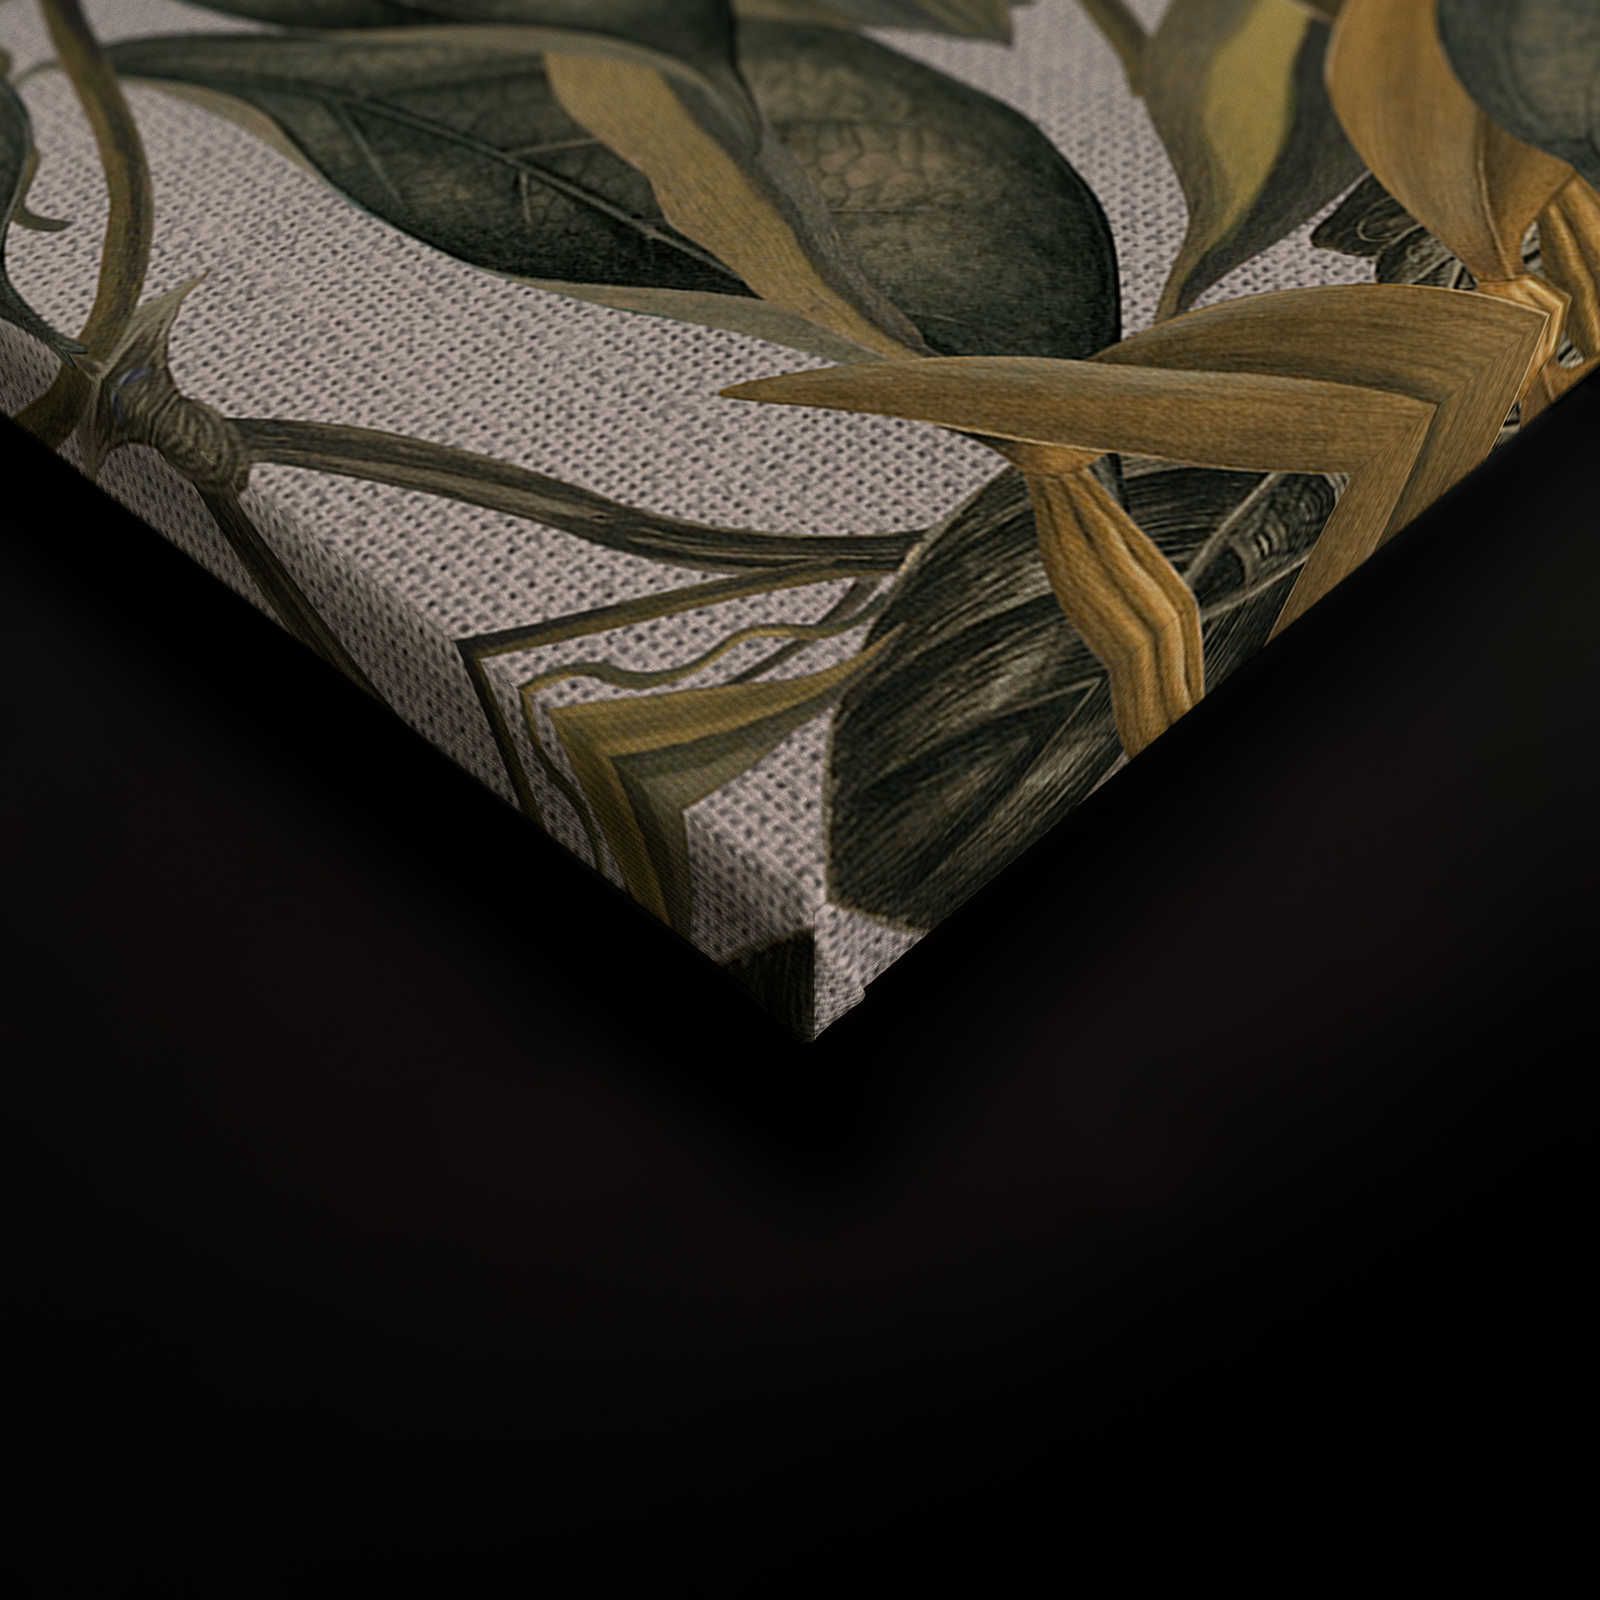             Leinwandbild Botanical Stil Blüten, Blättern & Textil-Look – 0,90 m x 0,60 m
        